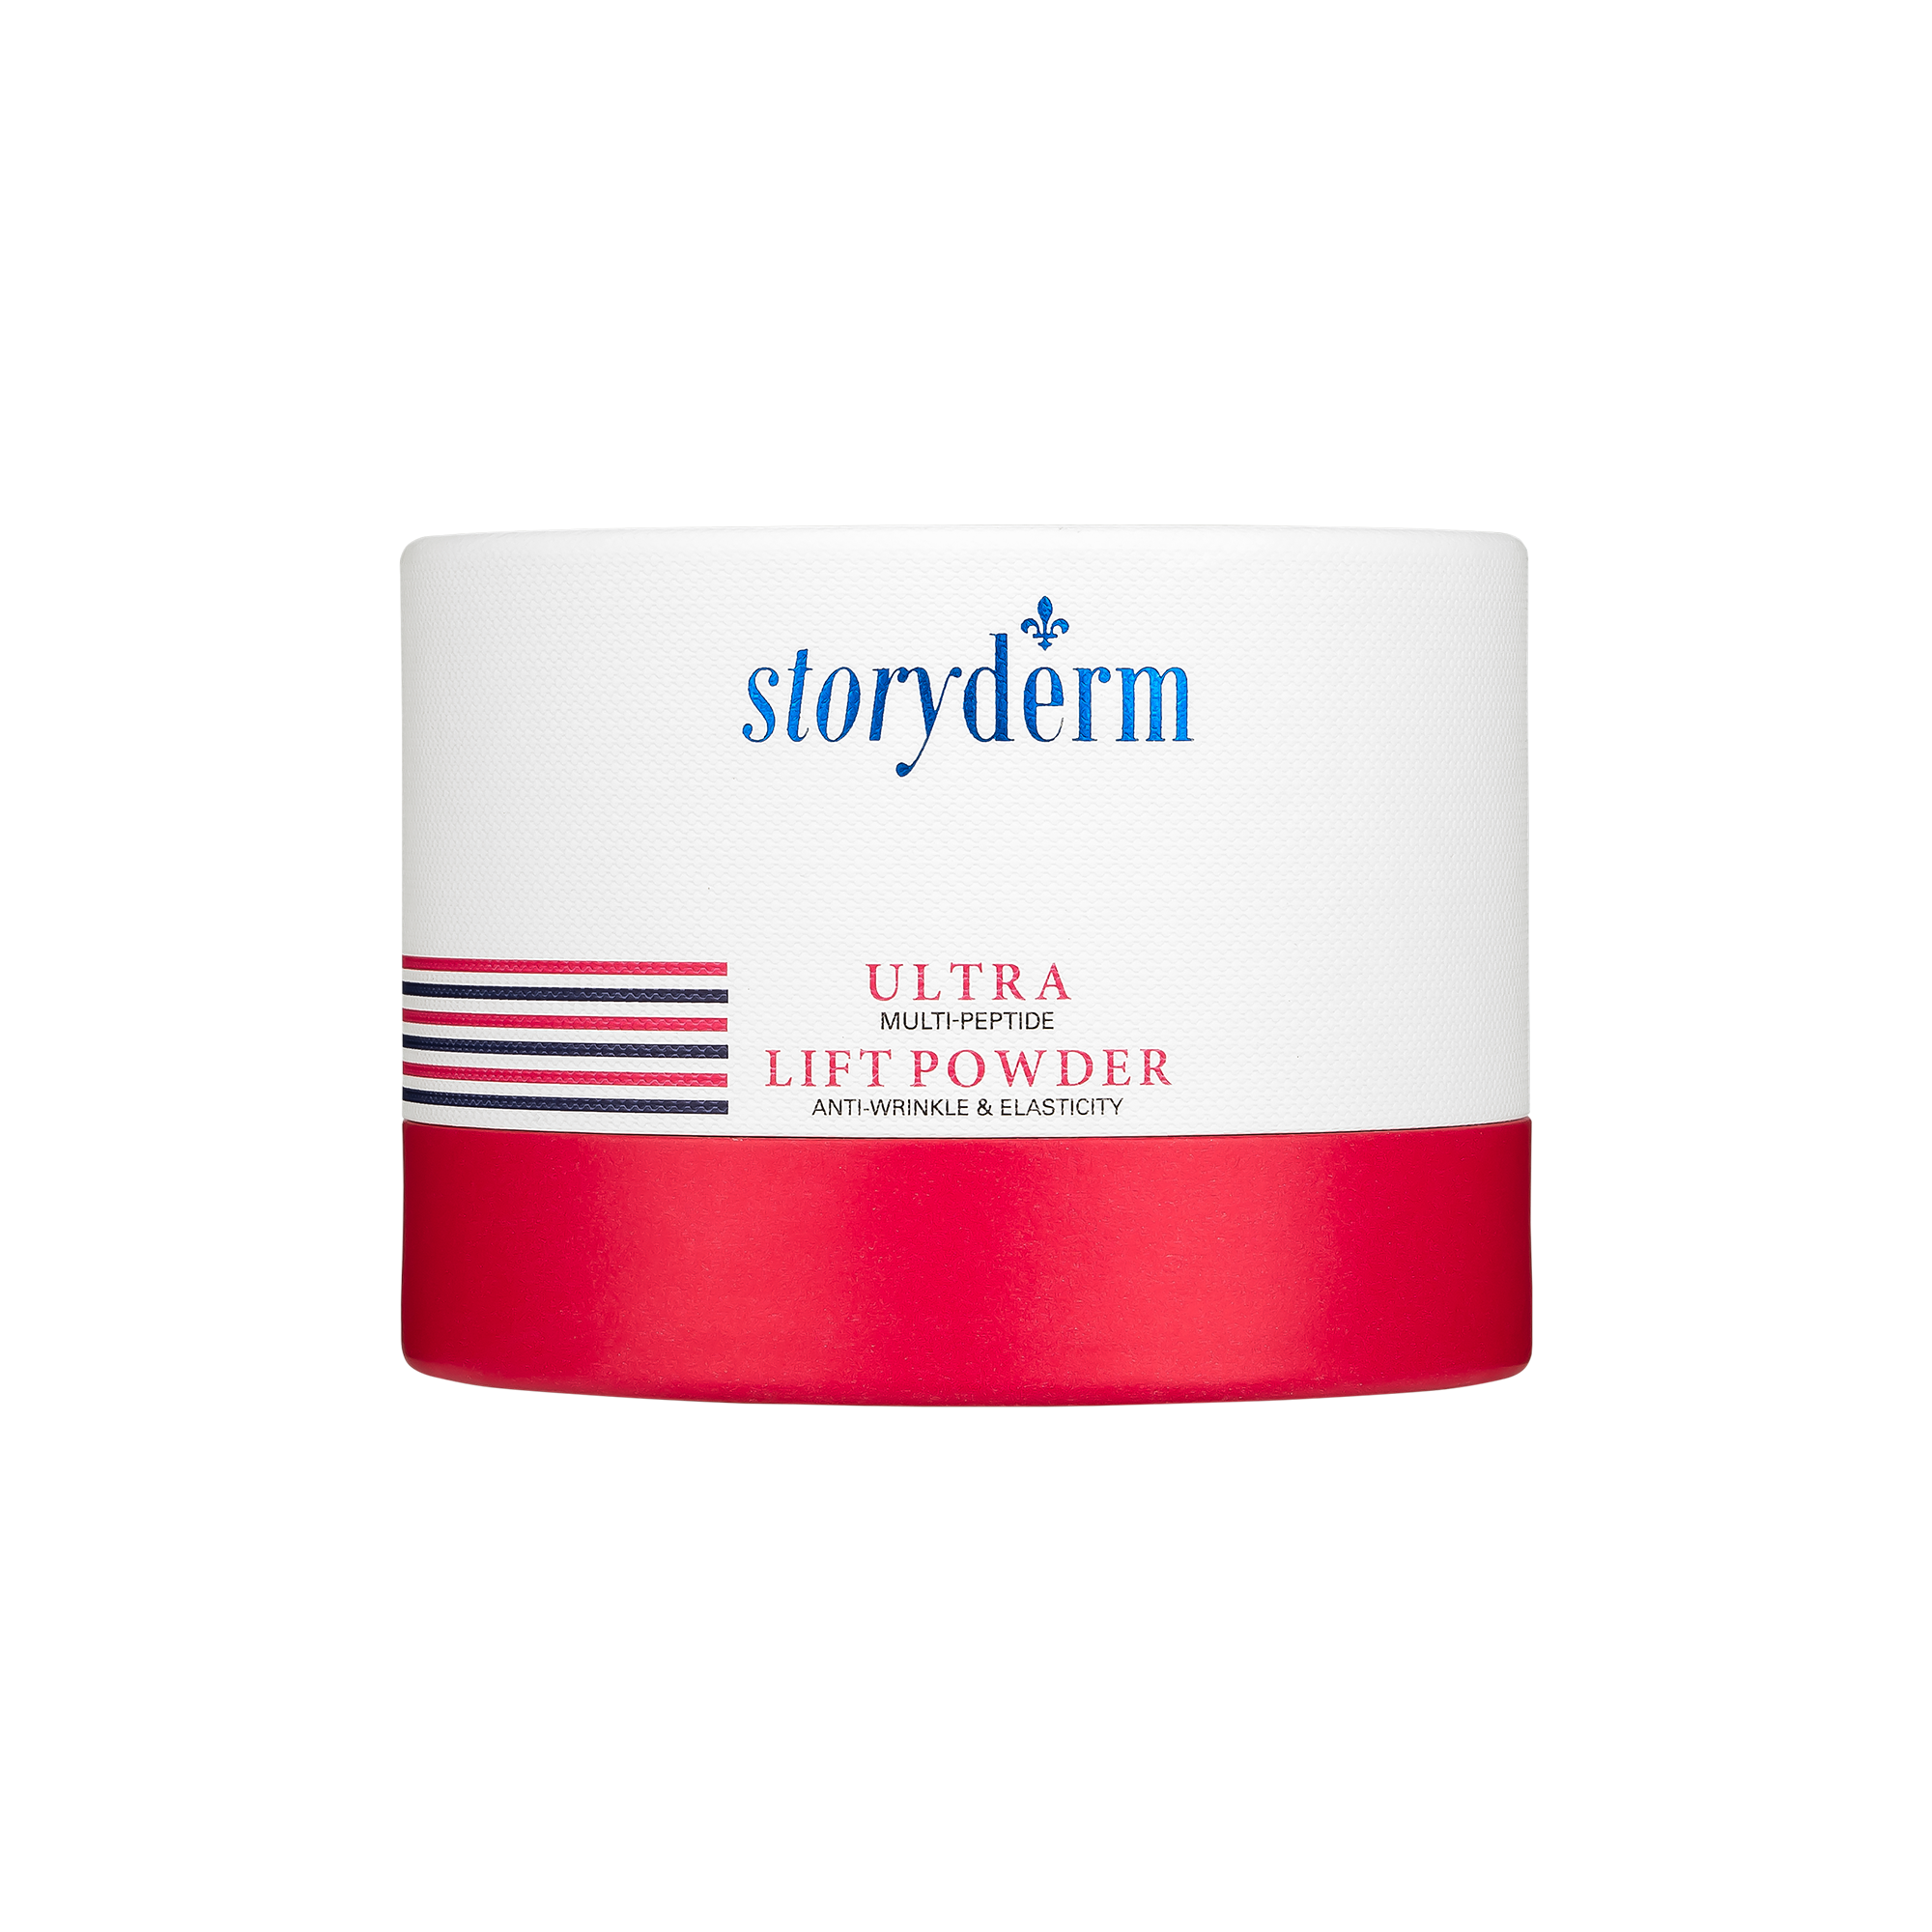 ULTRA LIFT POWDER - STORYDERM - A dermatology brand to reach the